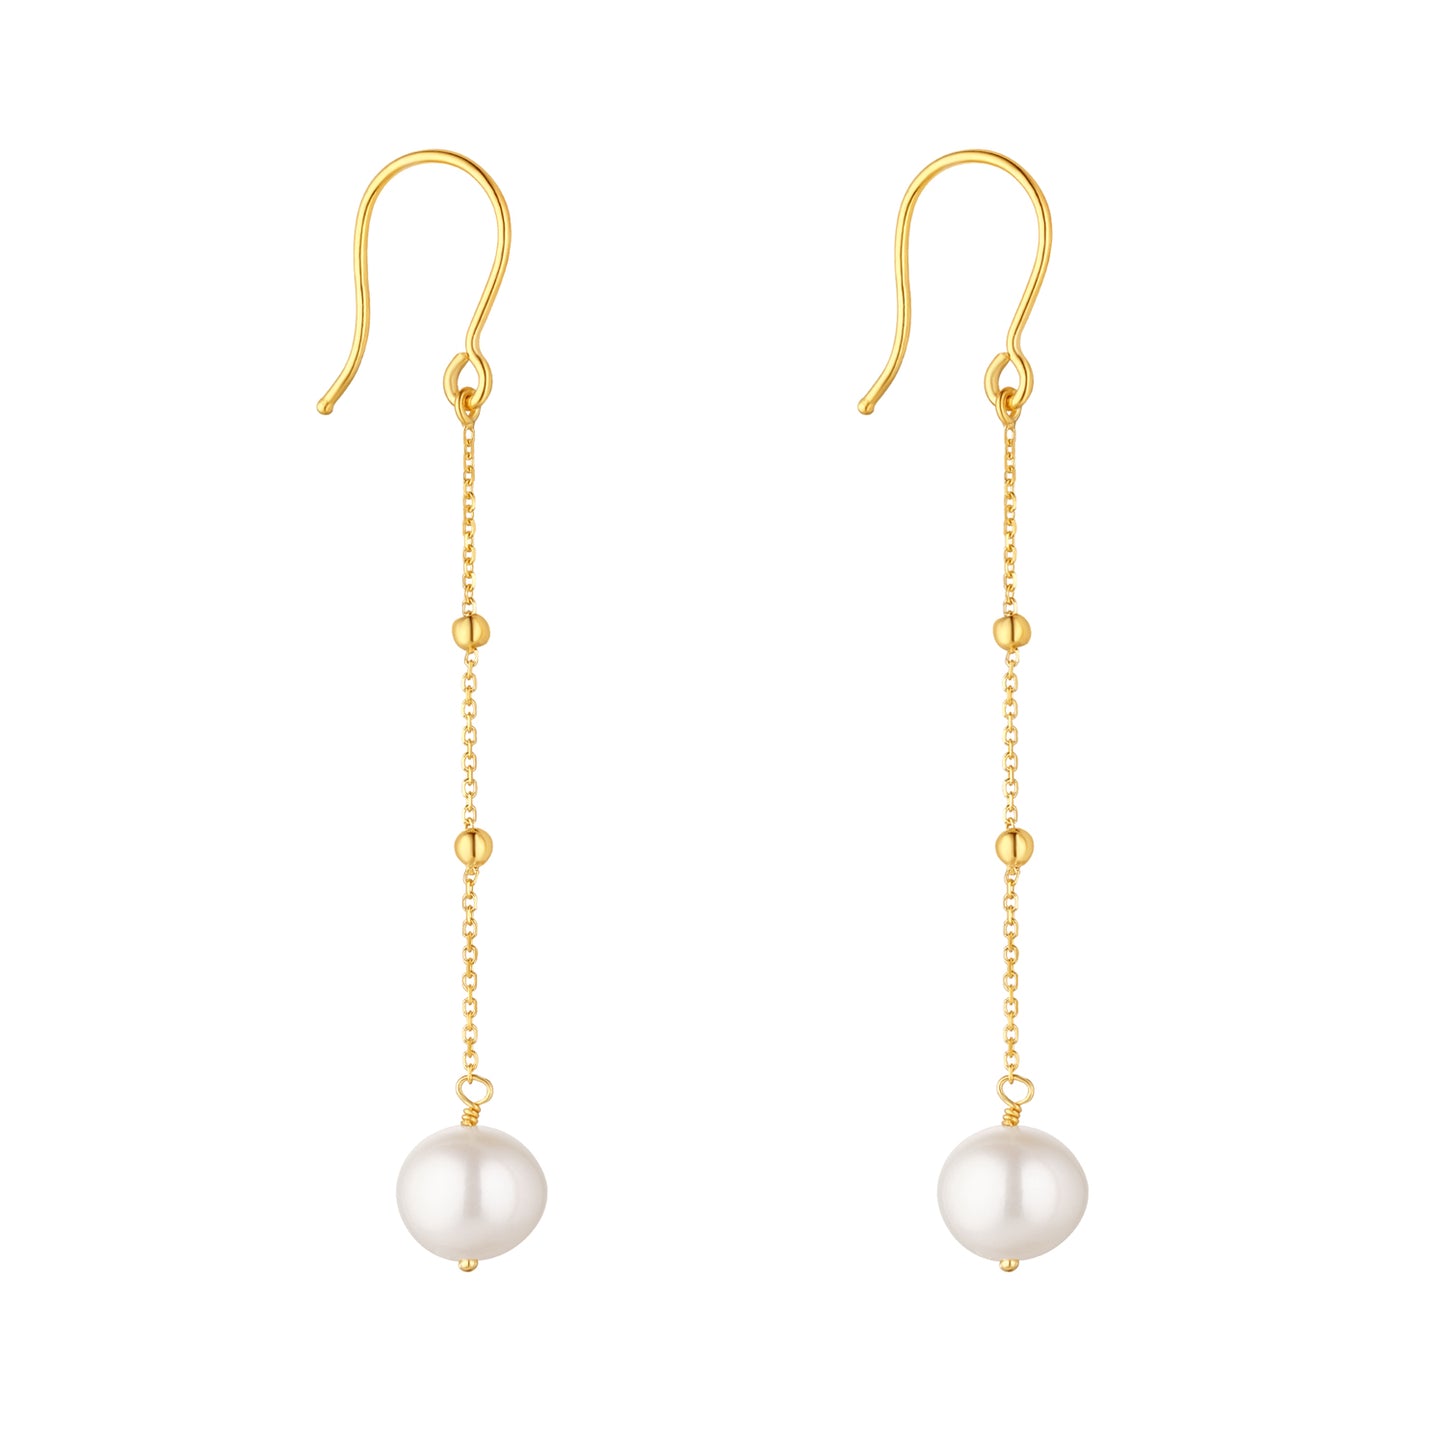 9ct Gold Pearl & Ball Chain Drop Earrings